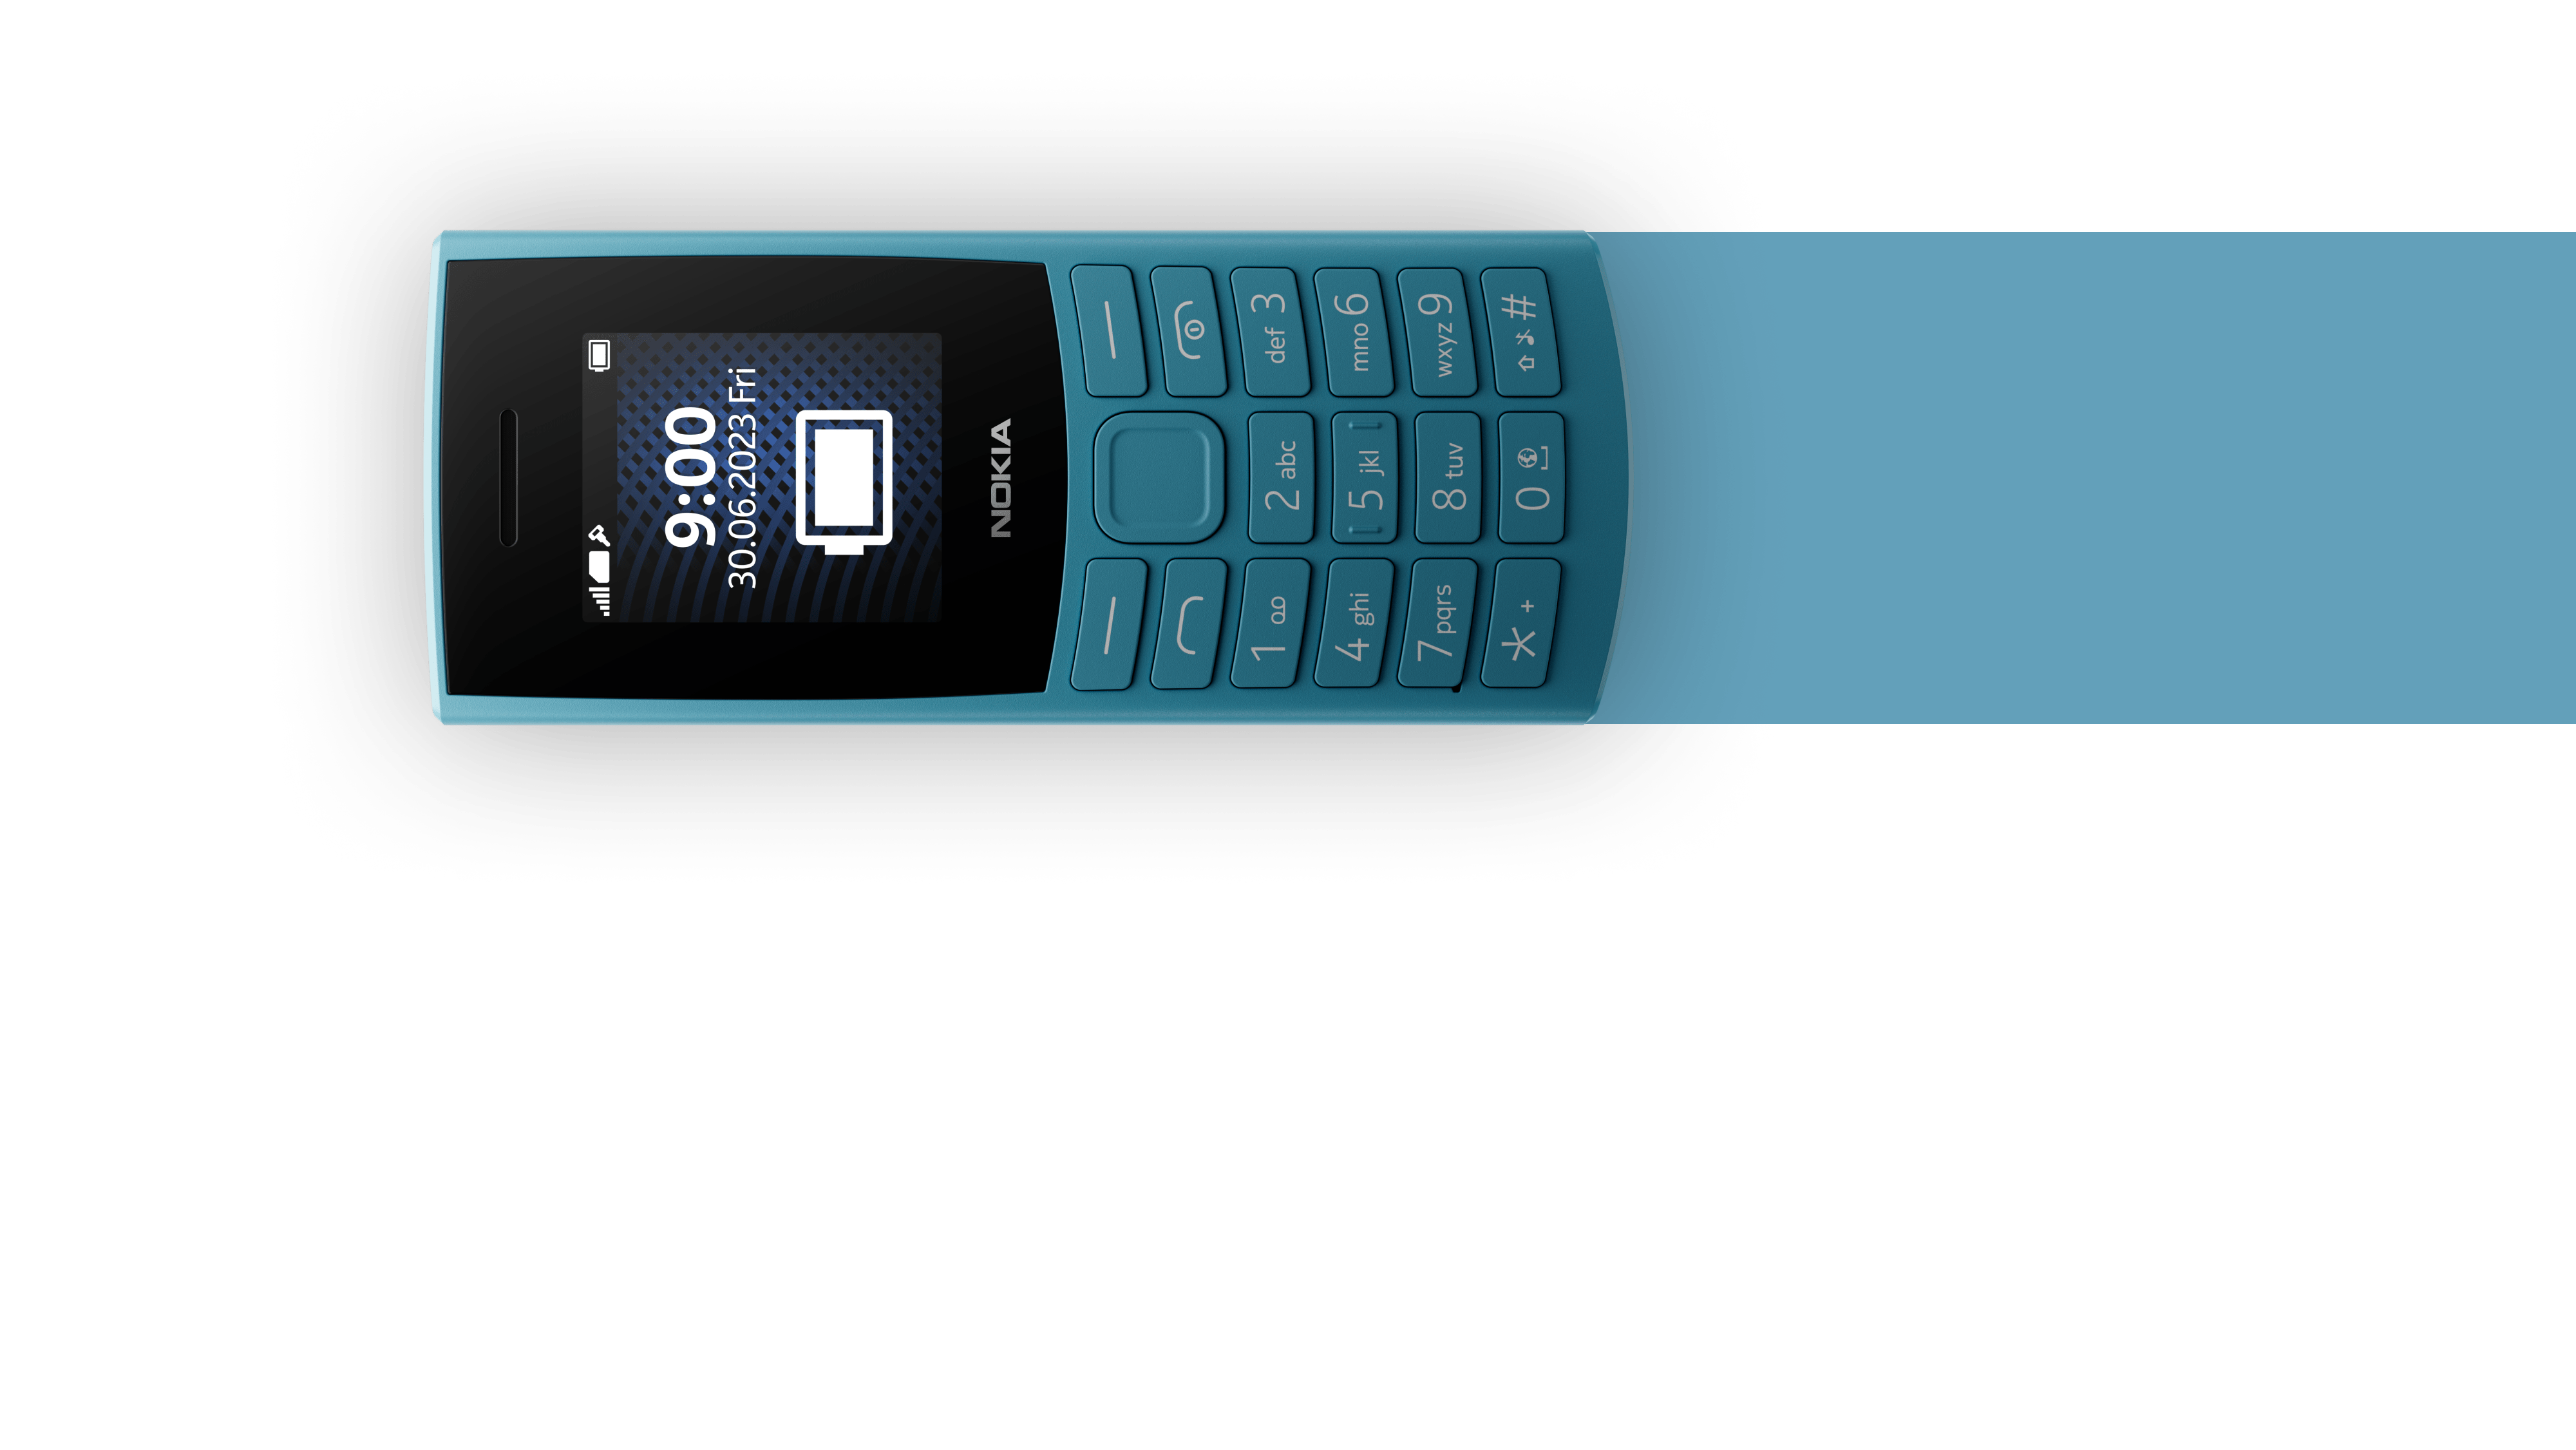 New Nokia 105 in Nnewi - Mobile Phones, Dozzydata Teleglobal